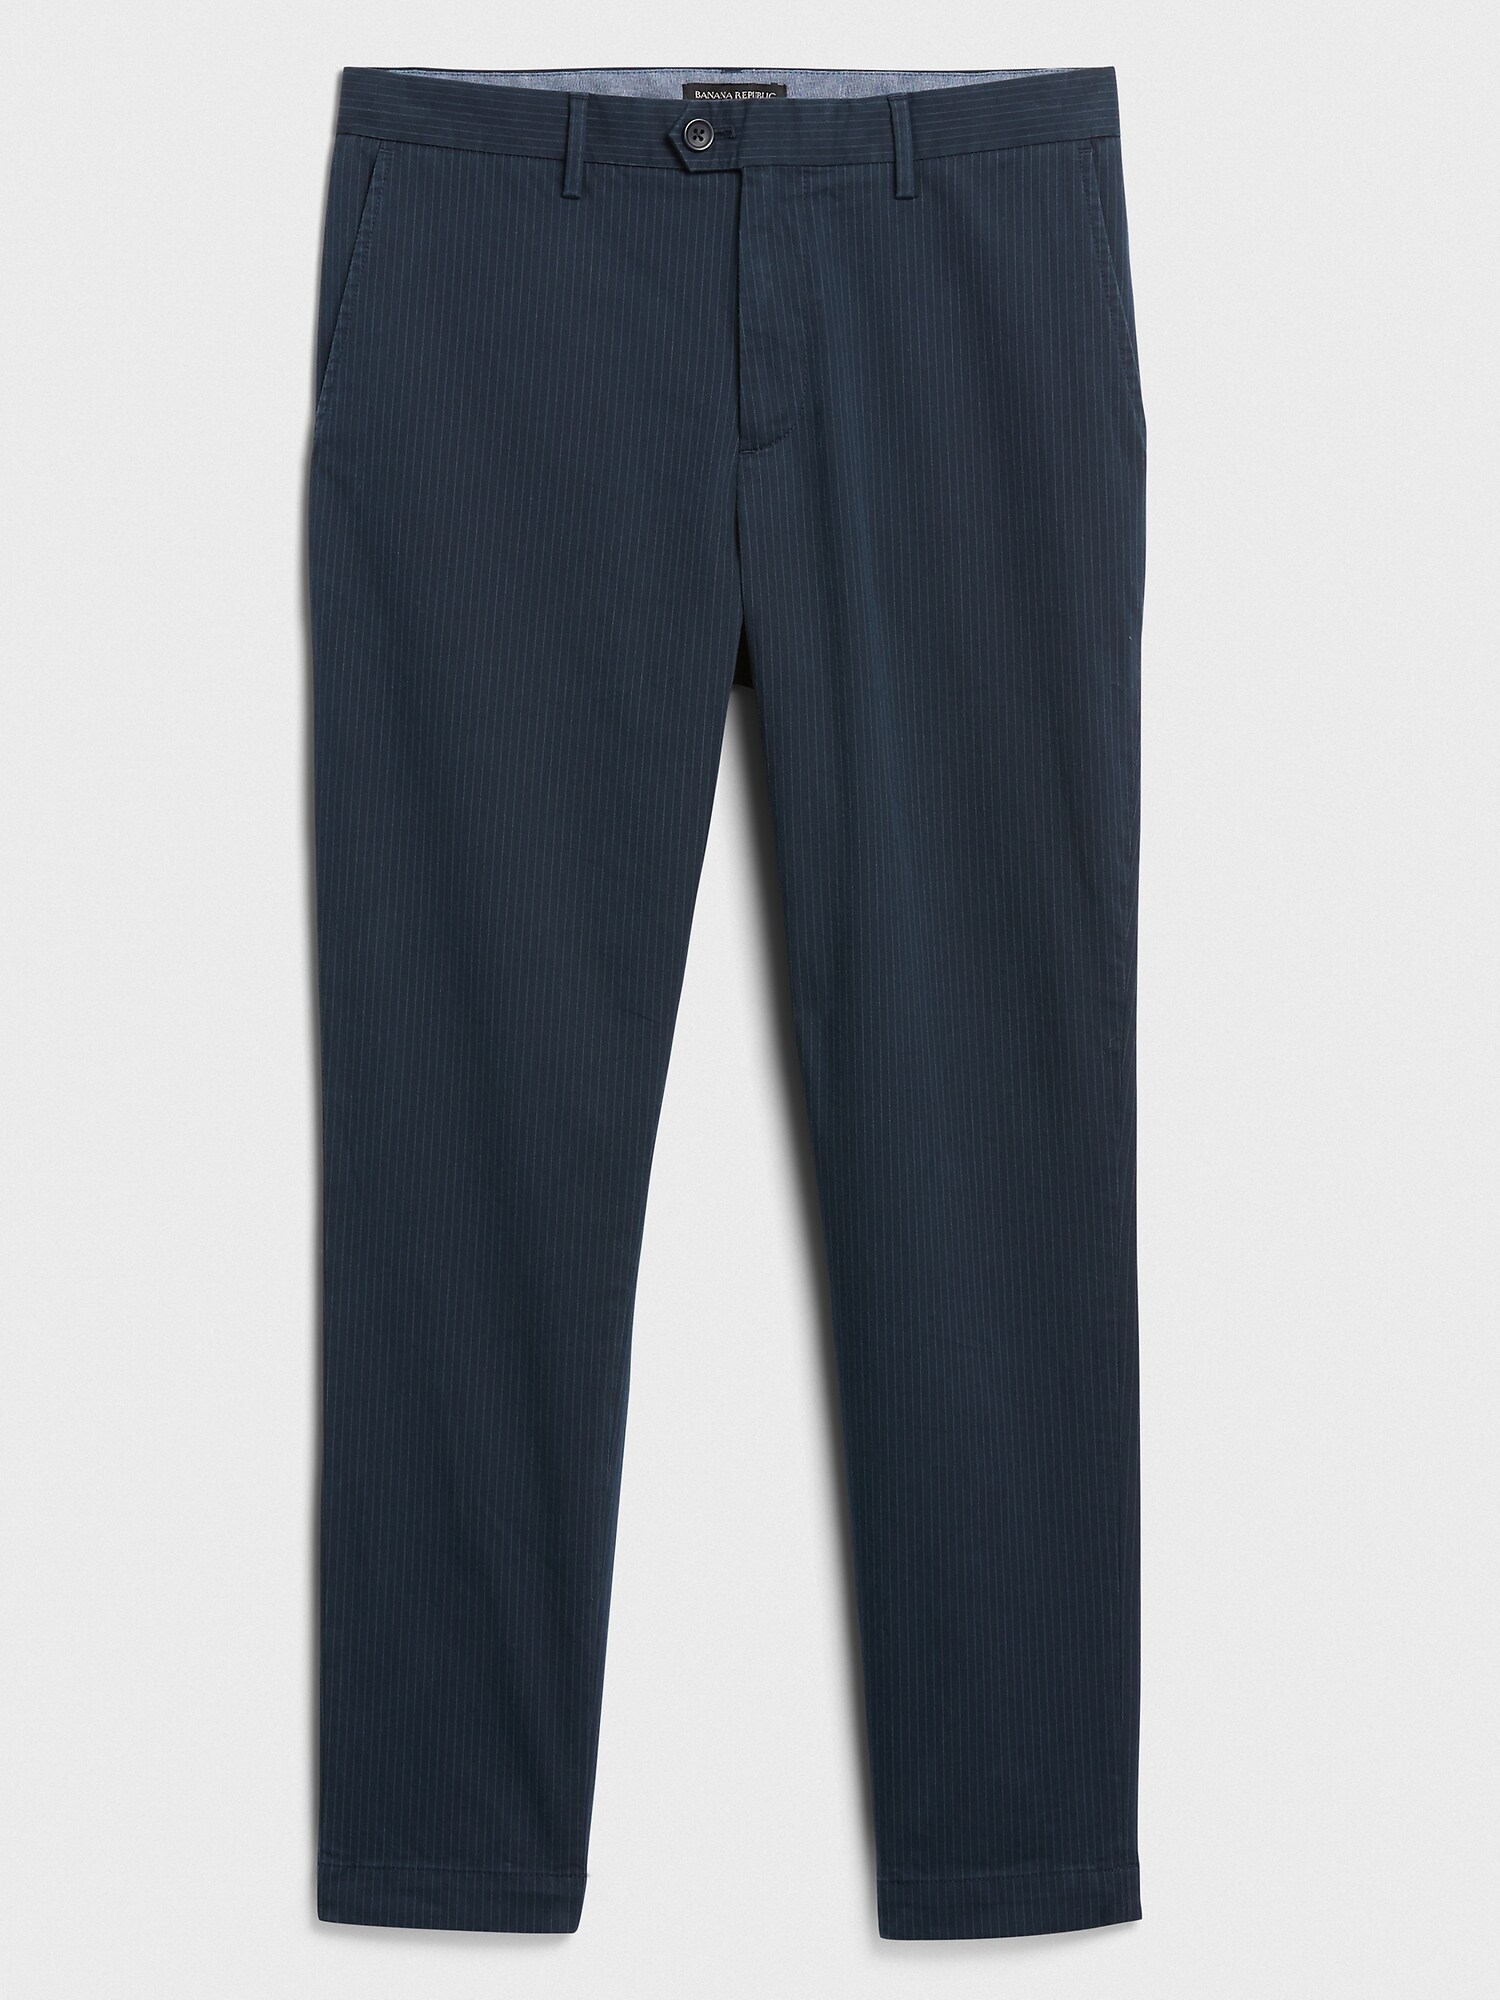 Ankle-Length Grayson Navy Stripe Pant